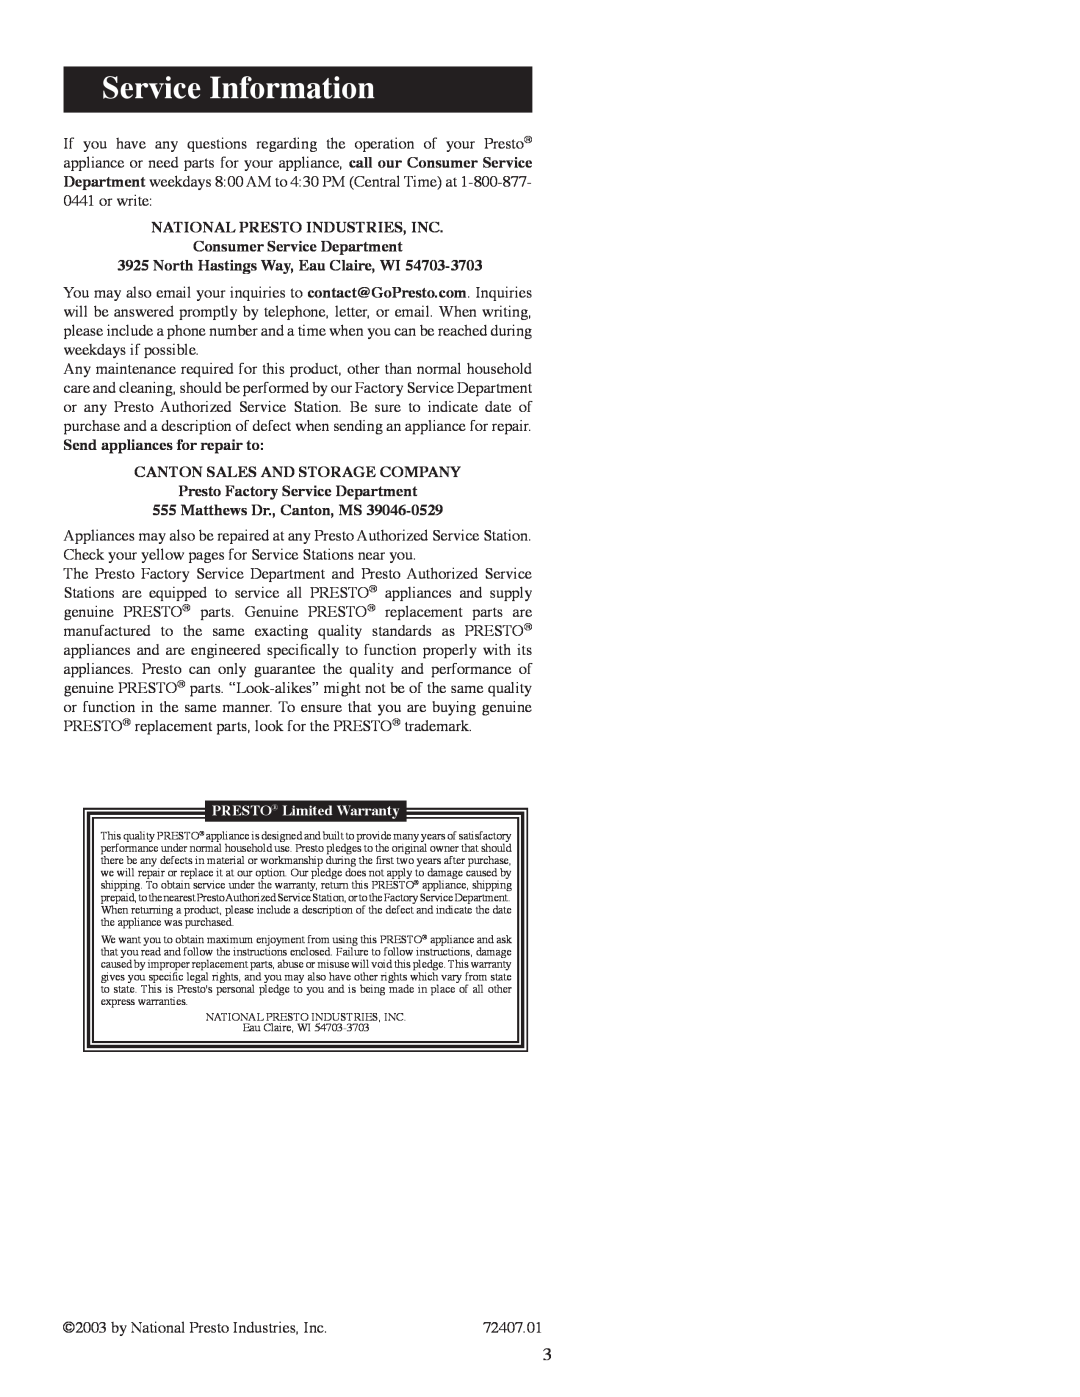 Presto Fryer Service Information, National Presto Industries, Inc, Consumer Service Department, Matthews Dr., Canton, MS 